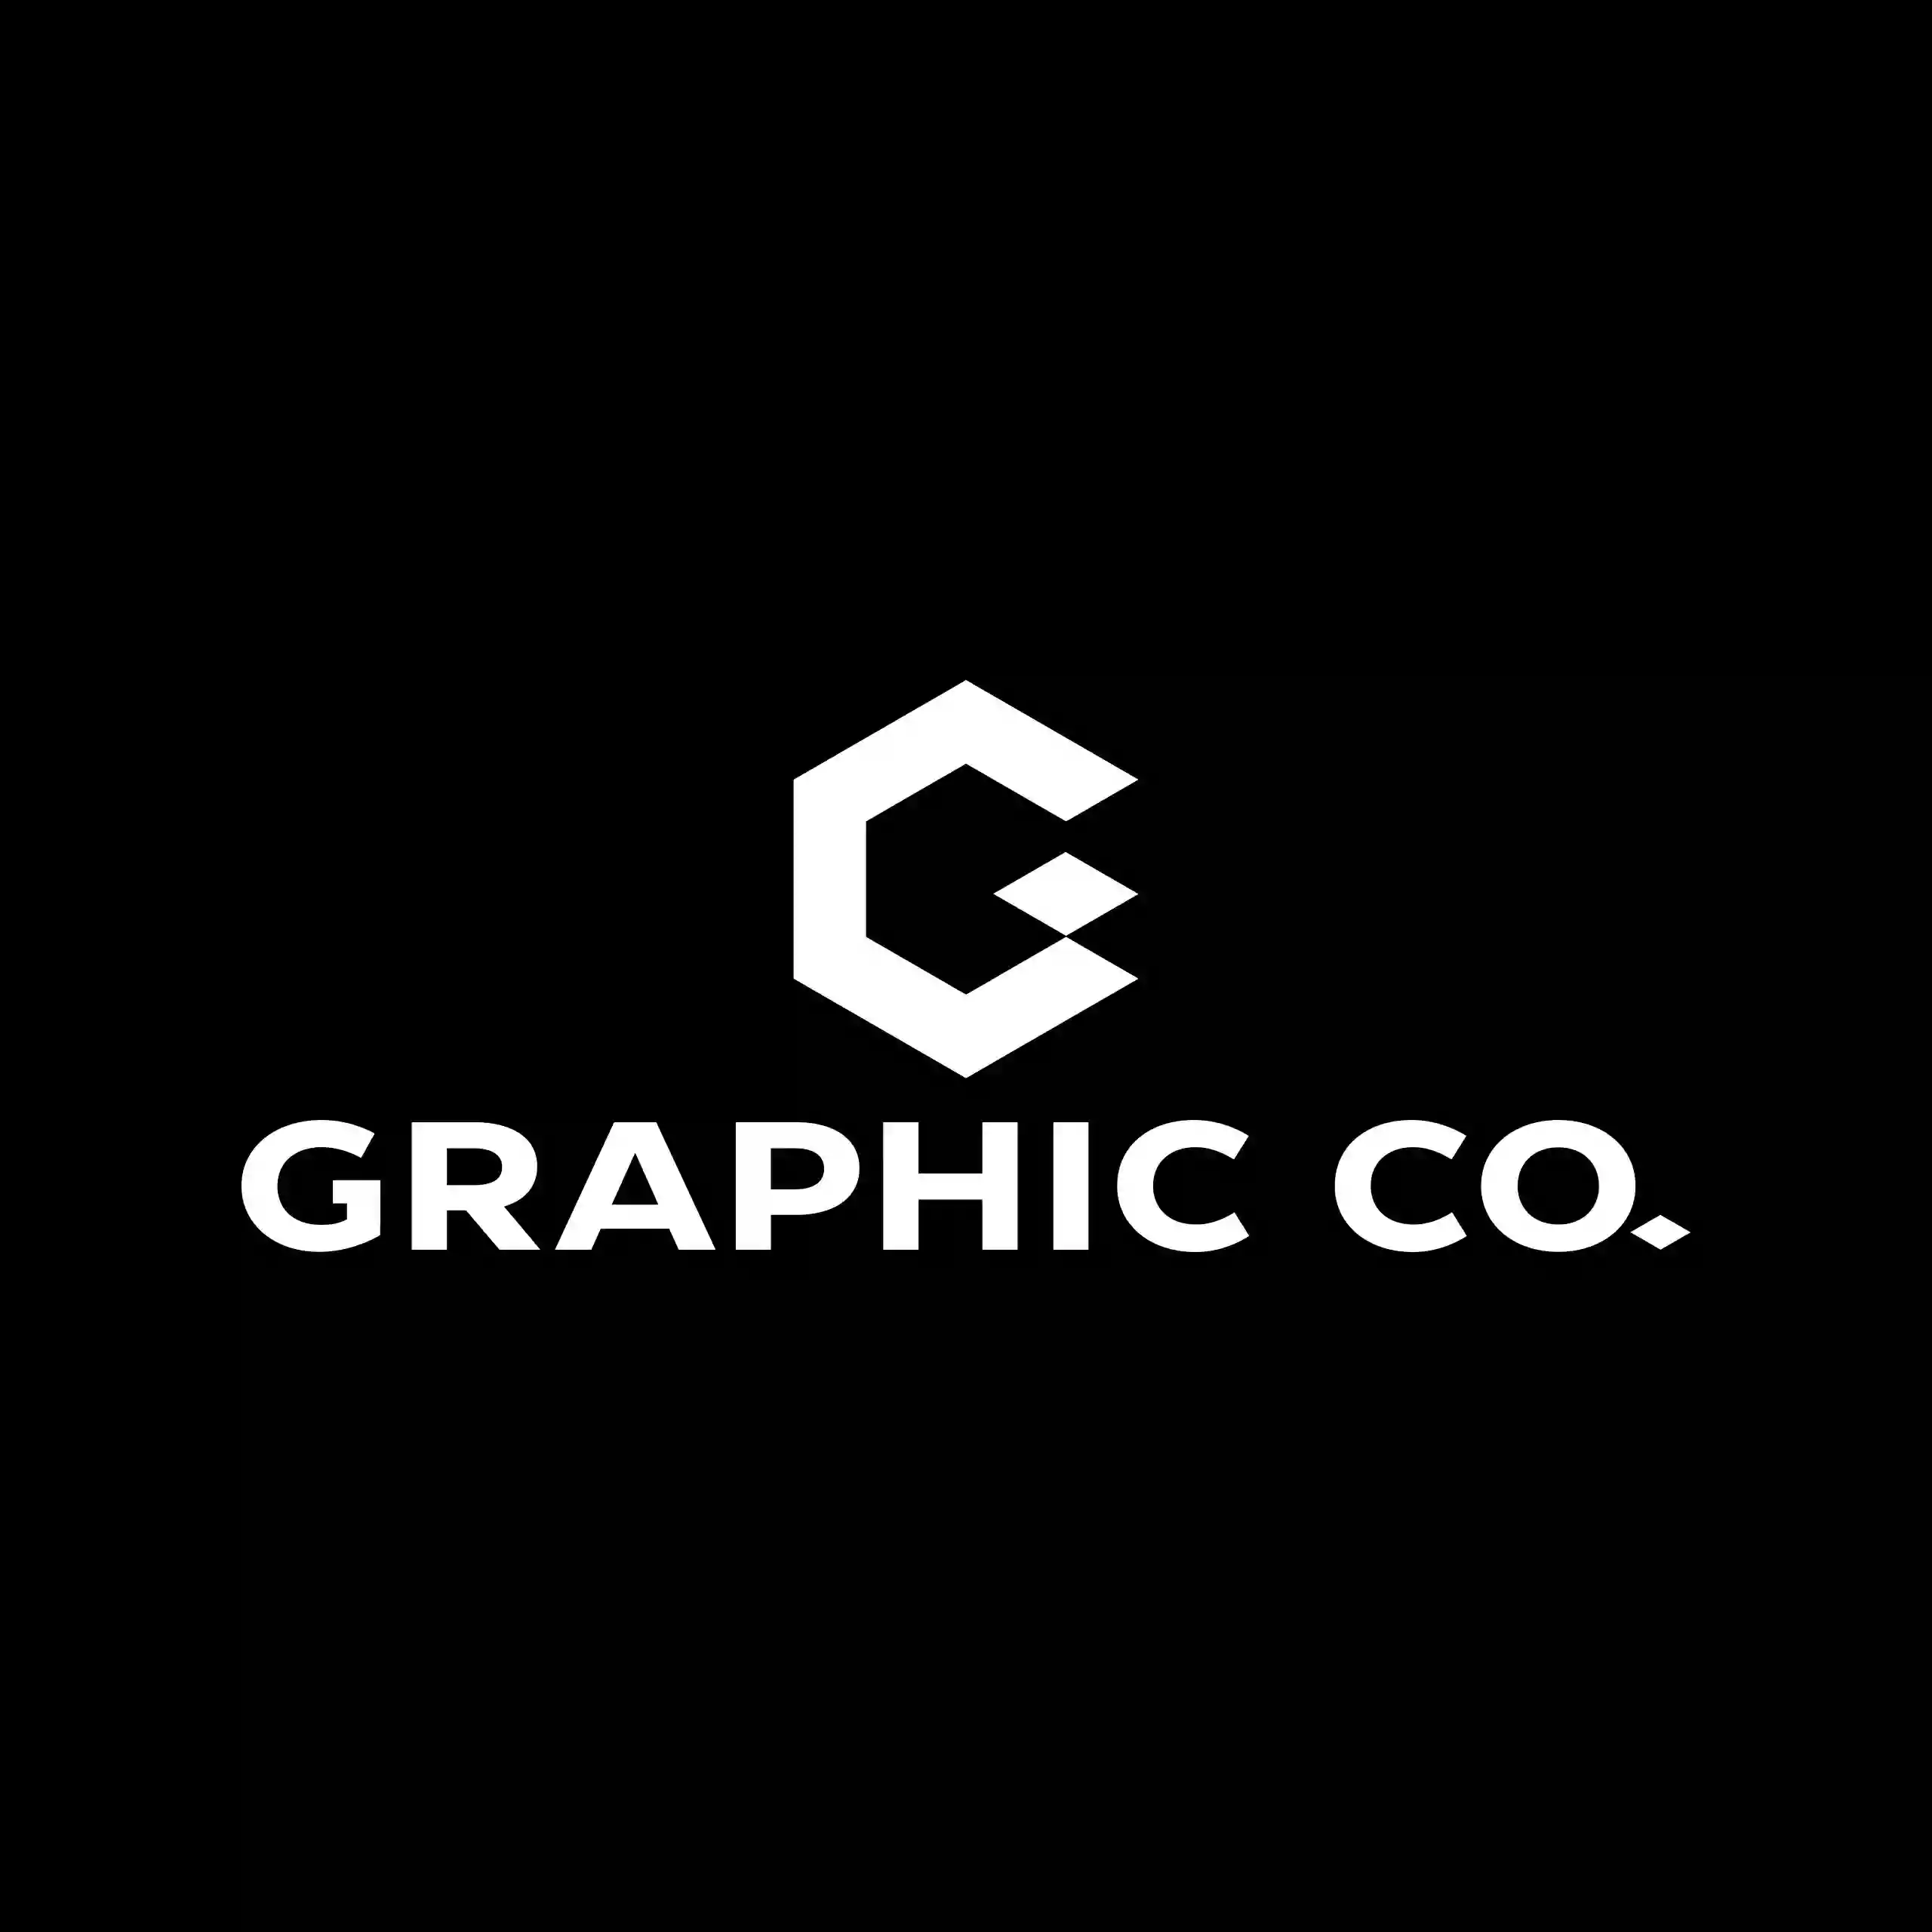 Graphic Co